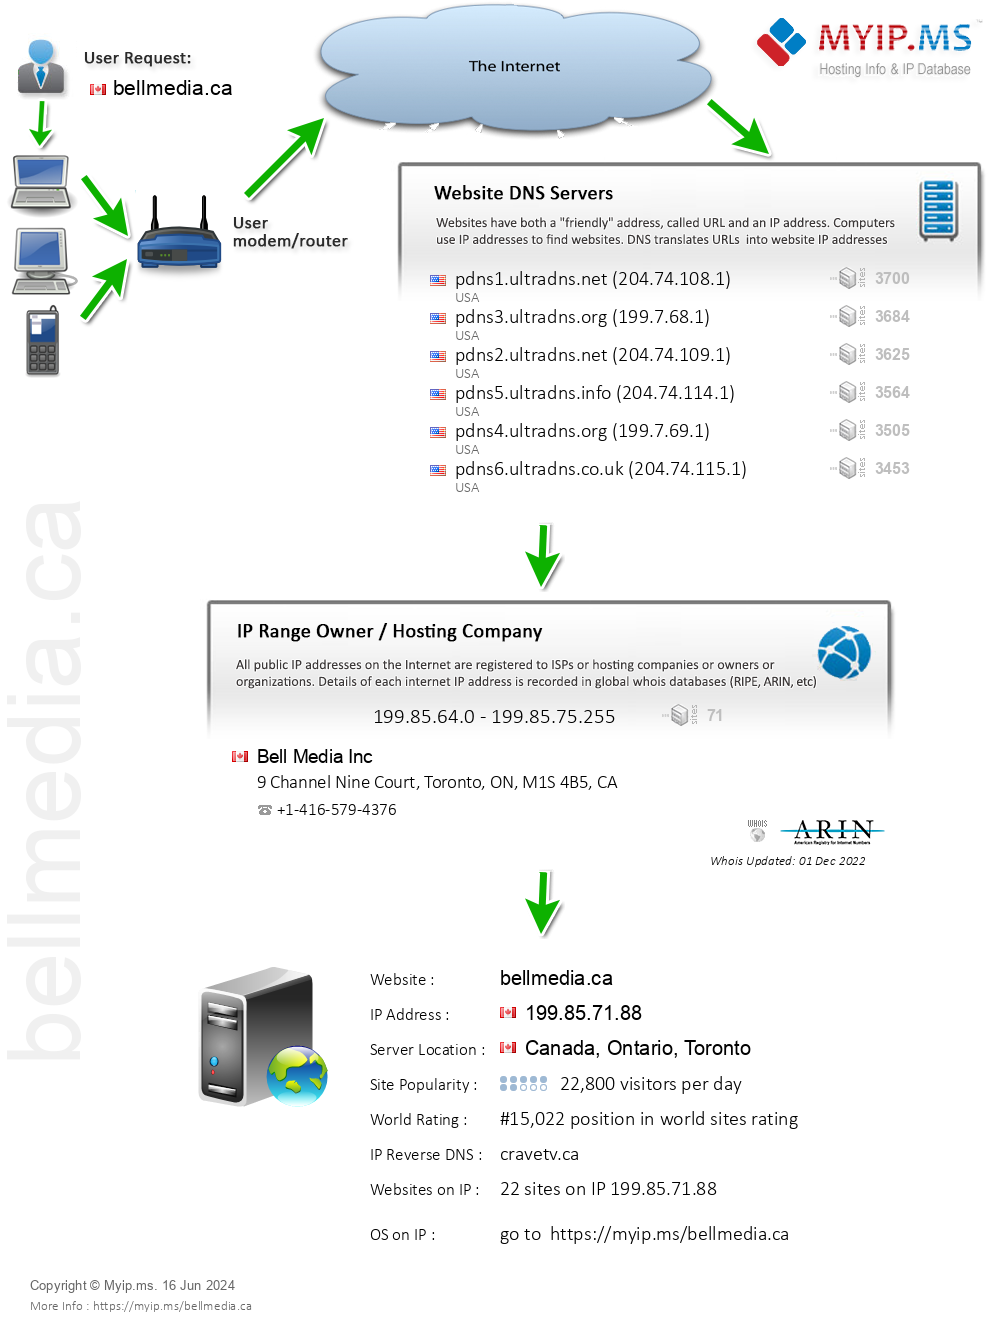 Bellmedia.ca - Website Hosting Visual IP Diagram